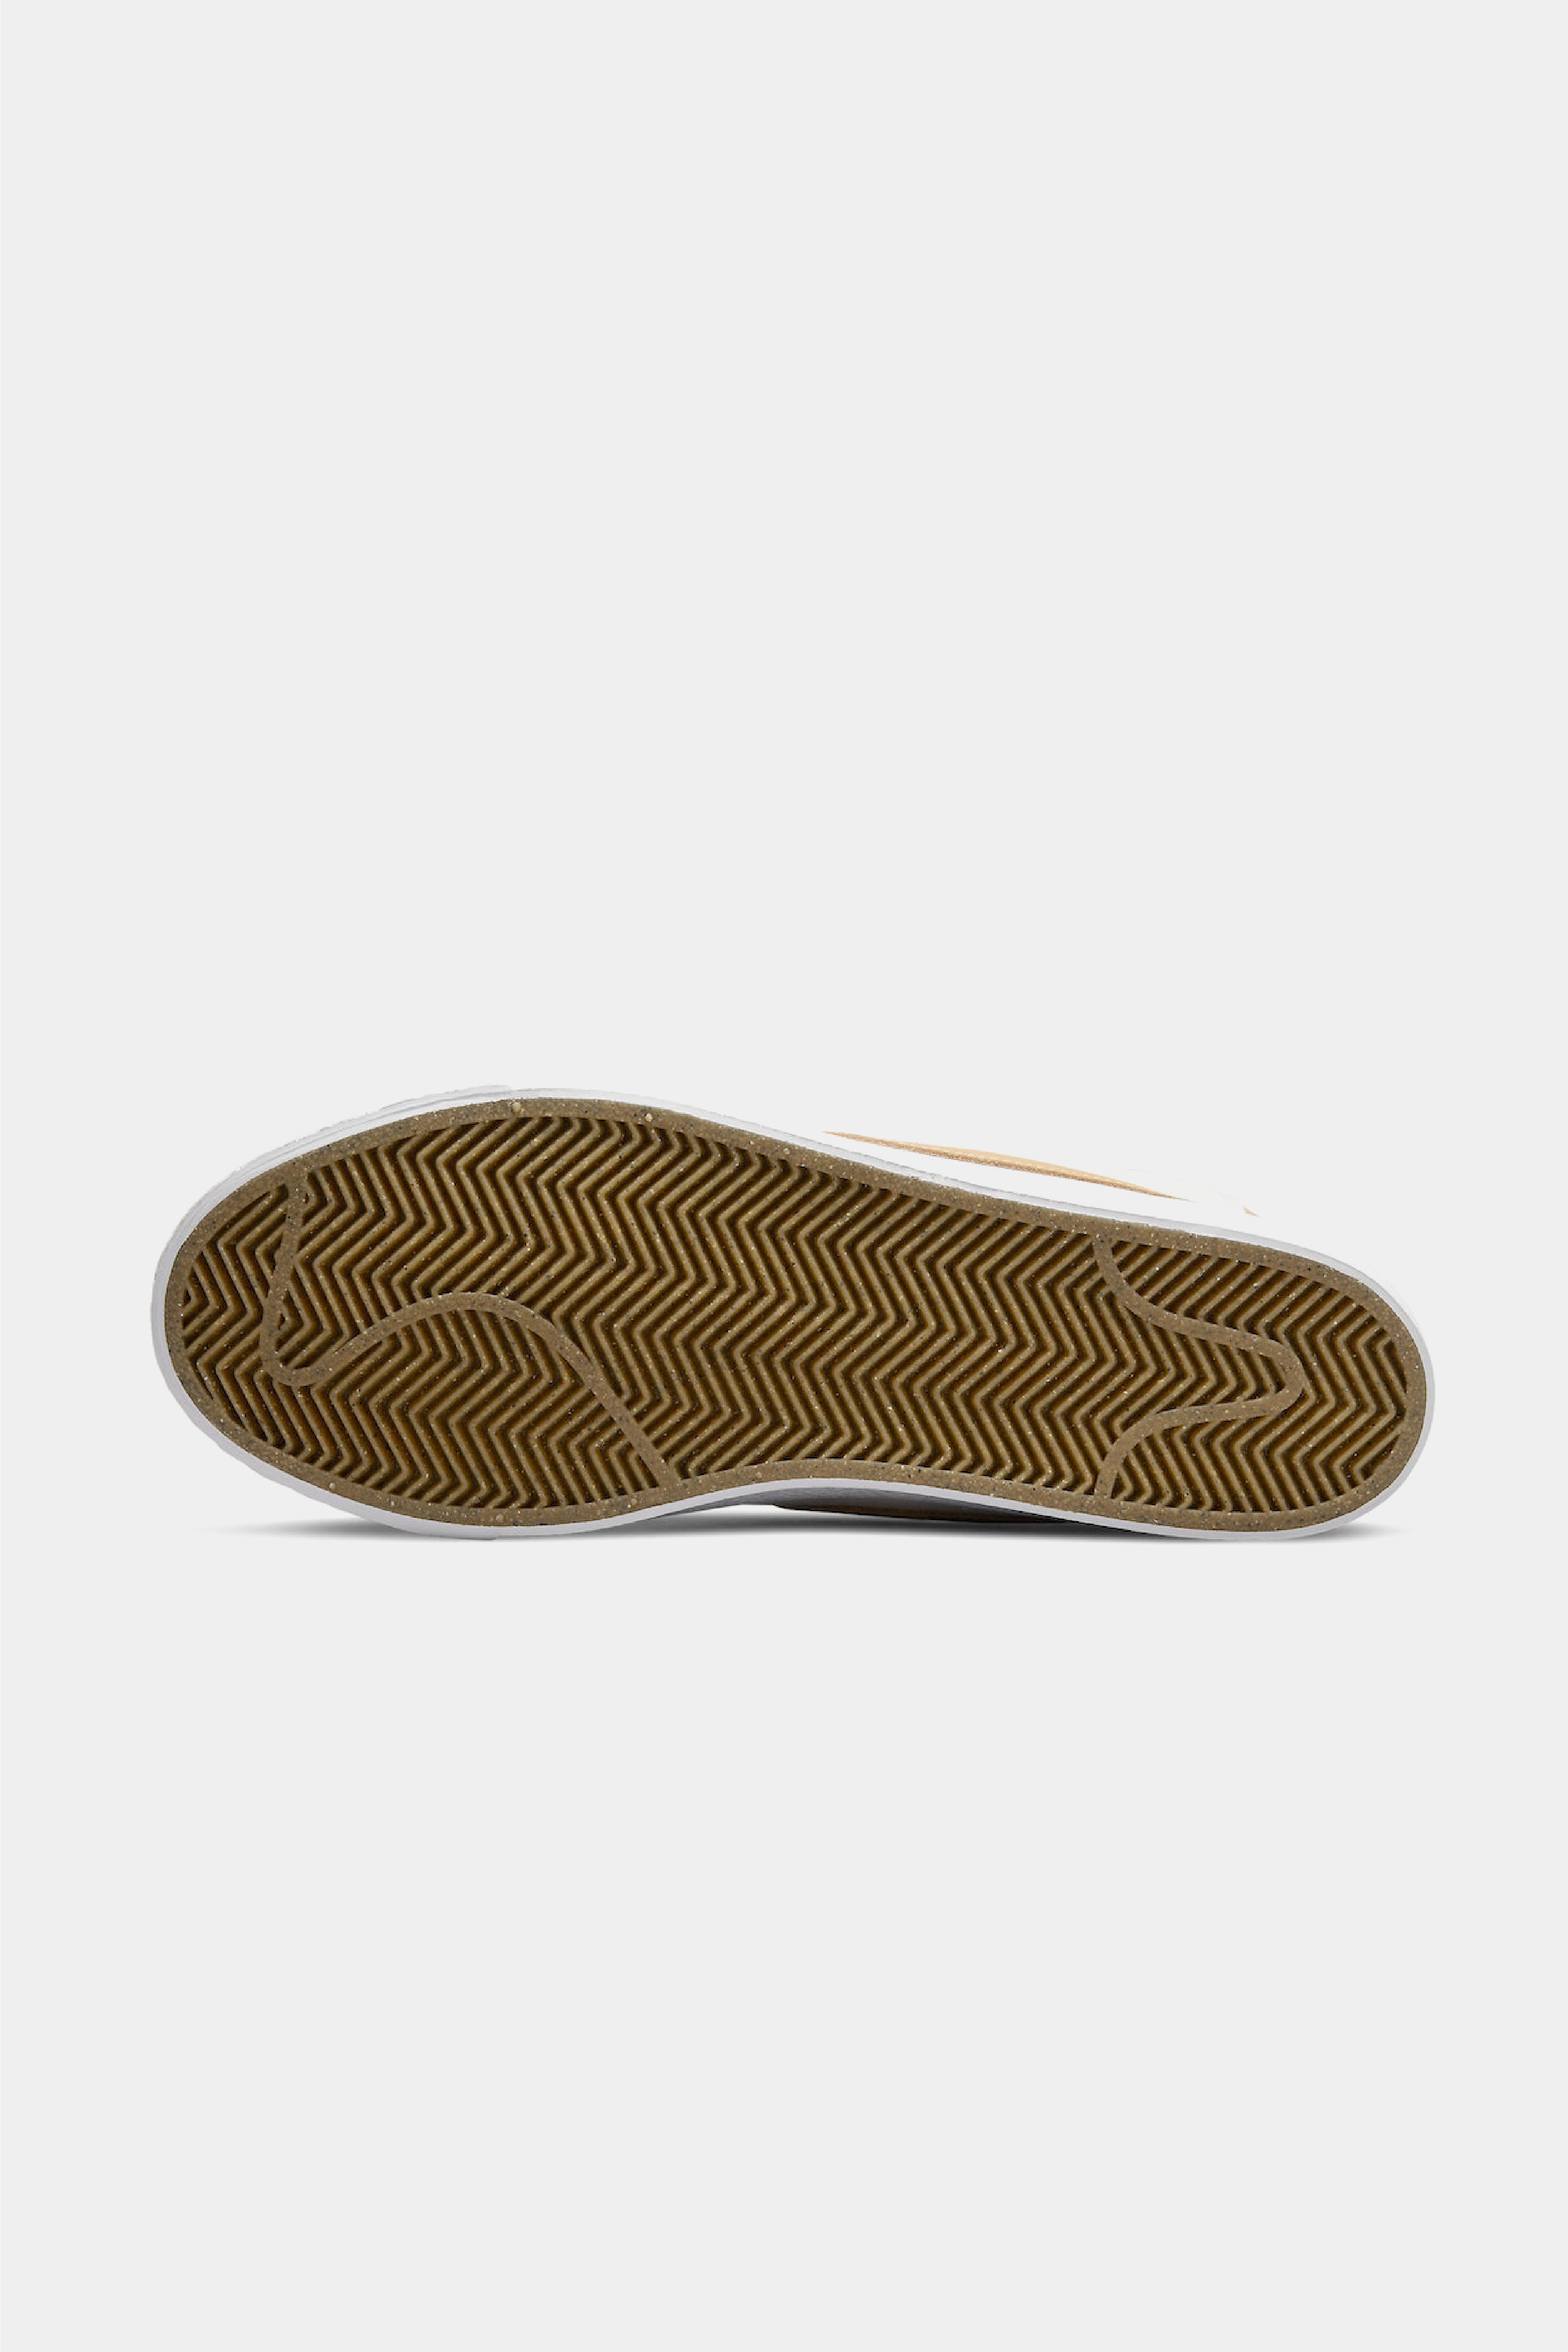 Selectshop FRAME - NIKE SB Nike SB Blazer Mid “Light Cognac” Footwear Dubai